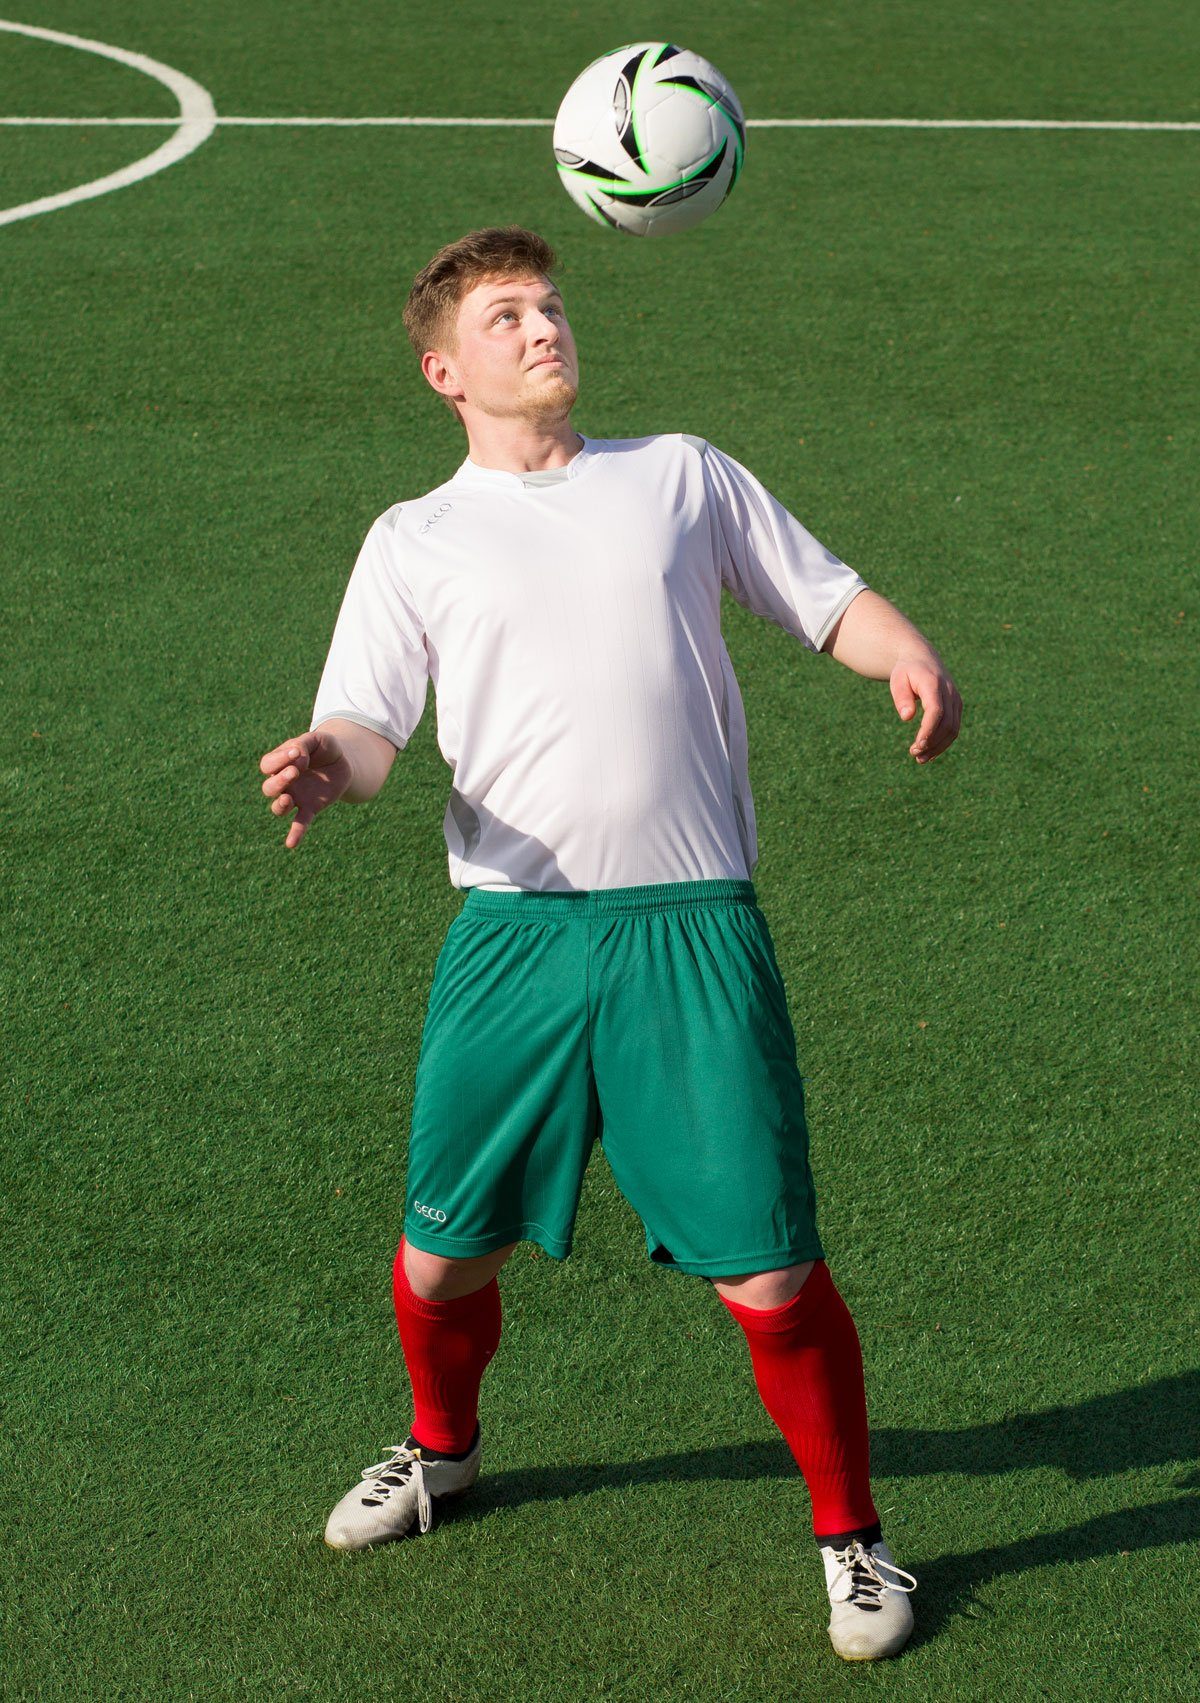 grün Trikothose Sportswear Boreas Shorts neutral Fußballtrikot kurze Fußballhose Geco